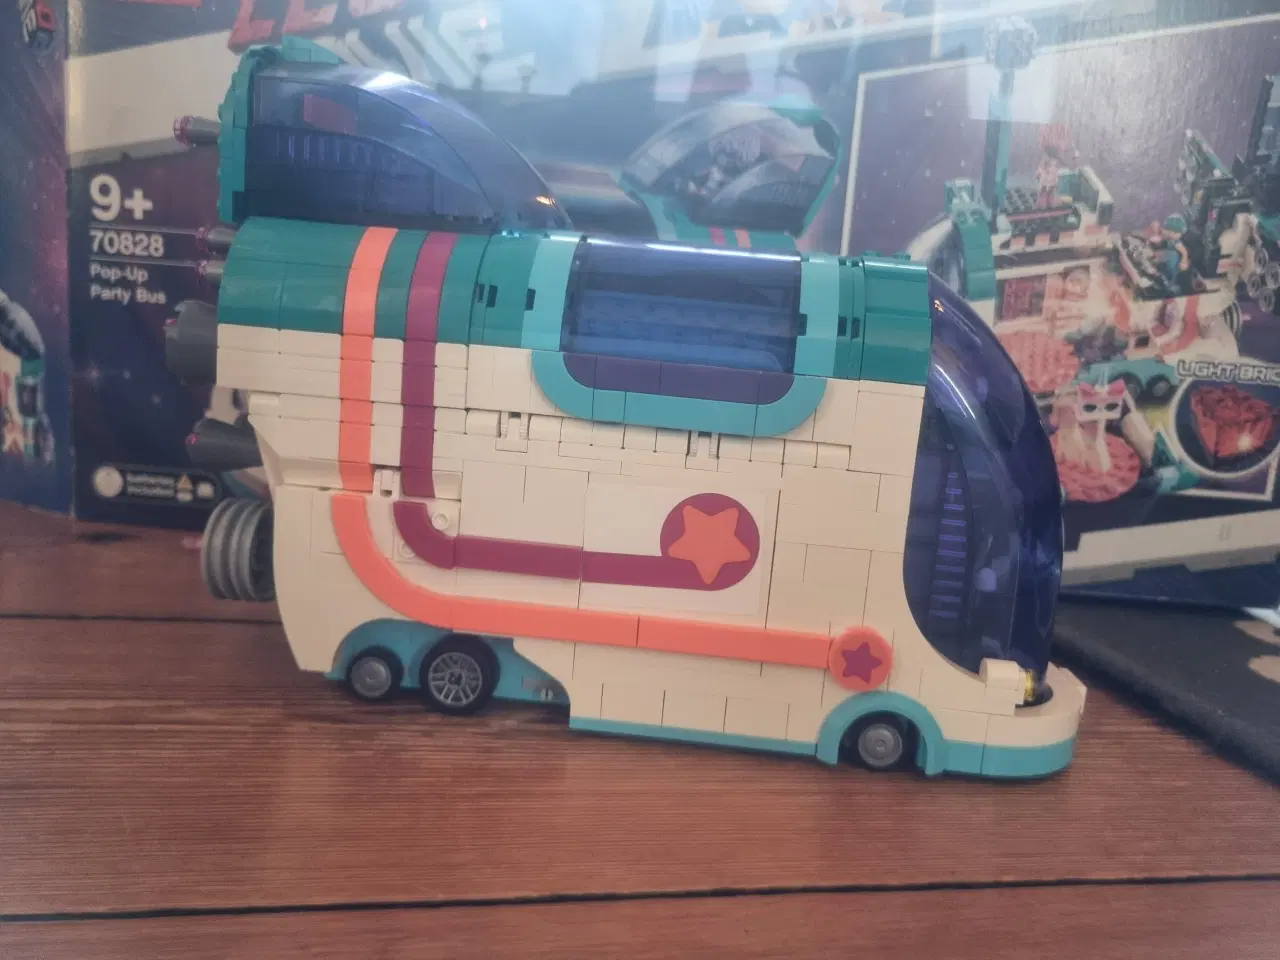 Billede 1 - Lego Movie 70828. Pop-up Party Bus